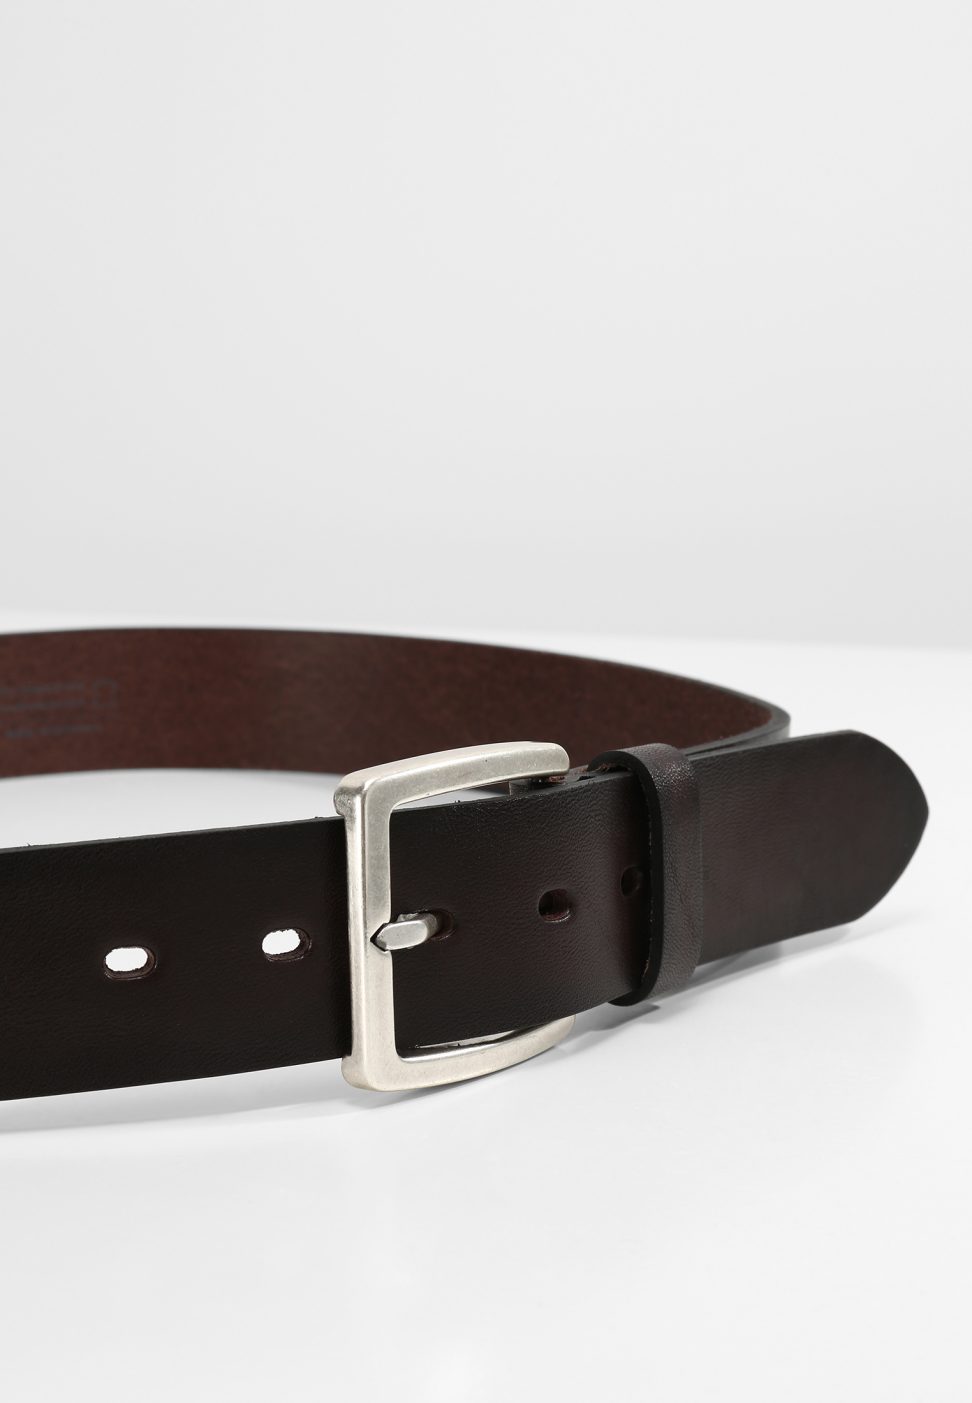 LLOYD Men's Belts Pasek Skórzany 1015/40-ciemny brąz 4cm